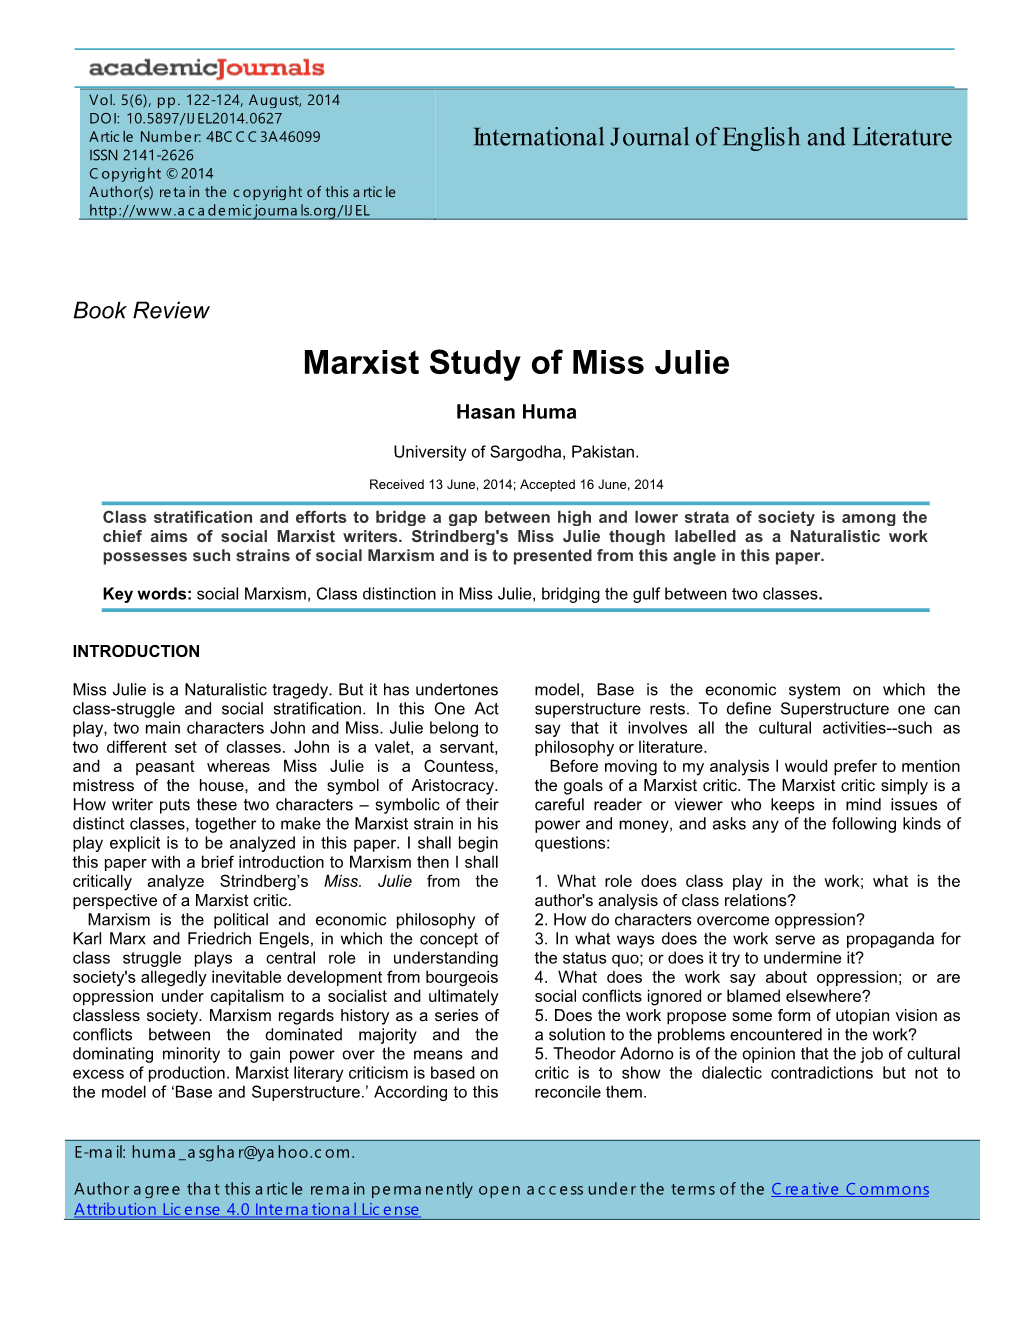 Marxist Study of Miss Julie